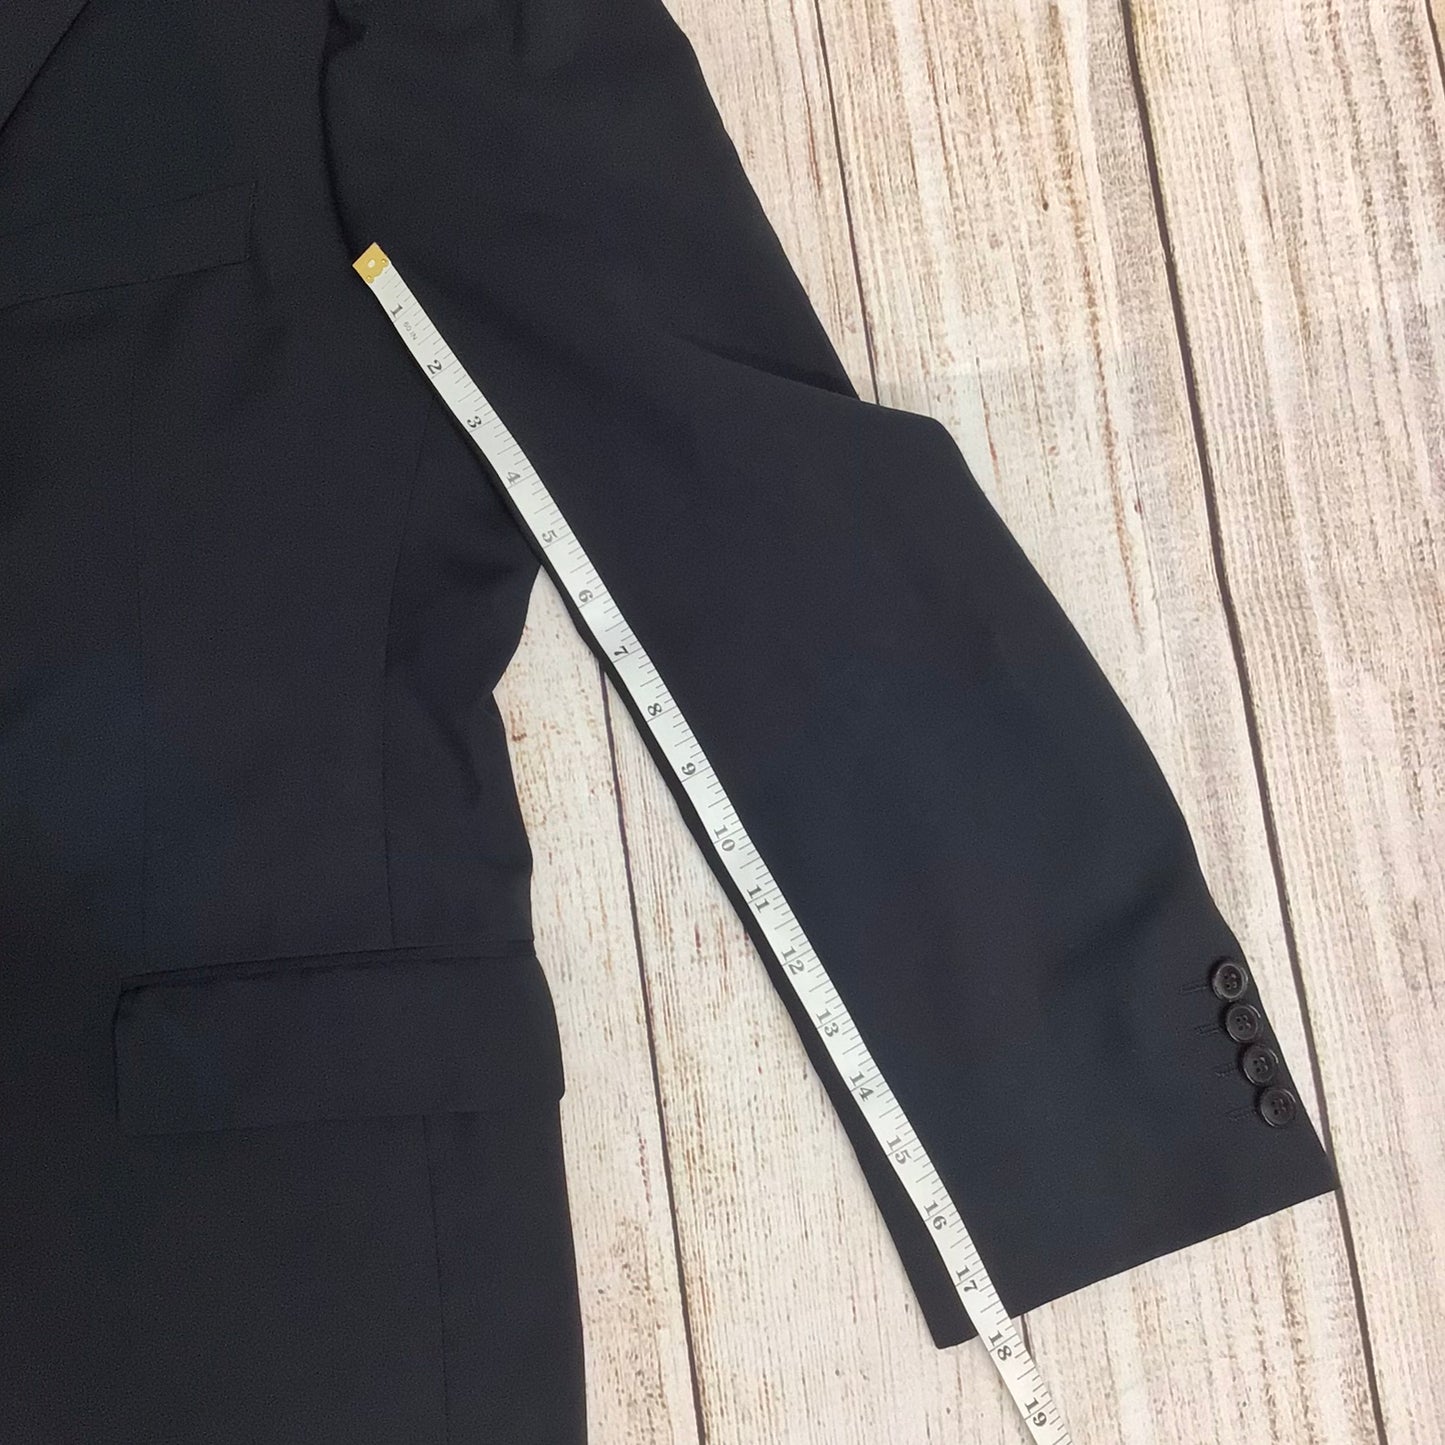 Hugo Boss Rosselini/Movie Black Suit Jacket 100% Wool Size 50